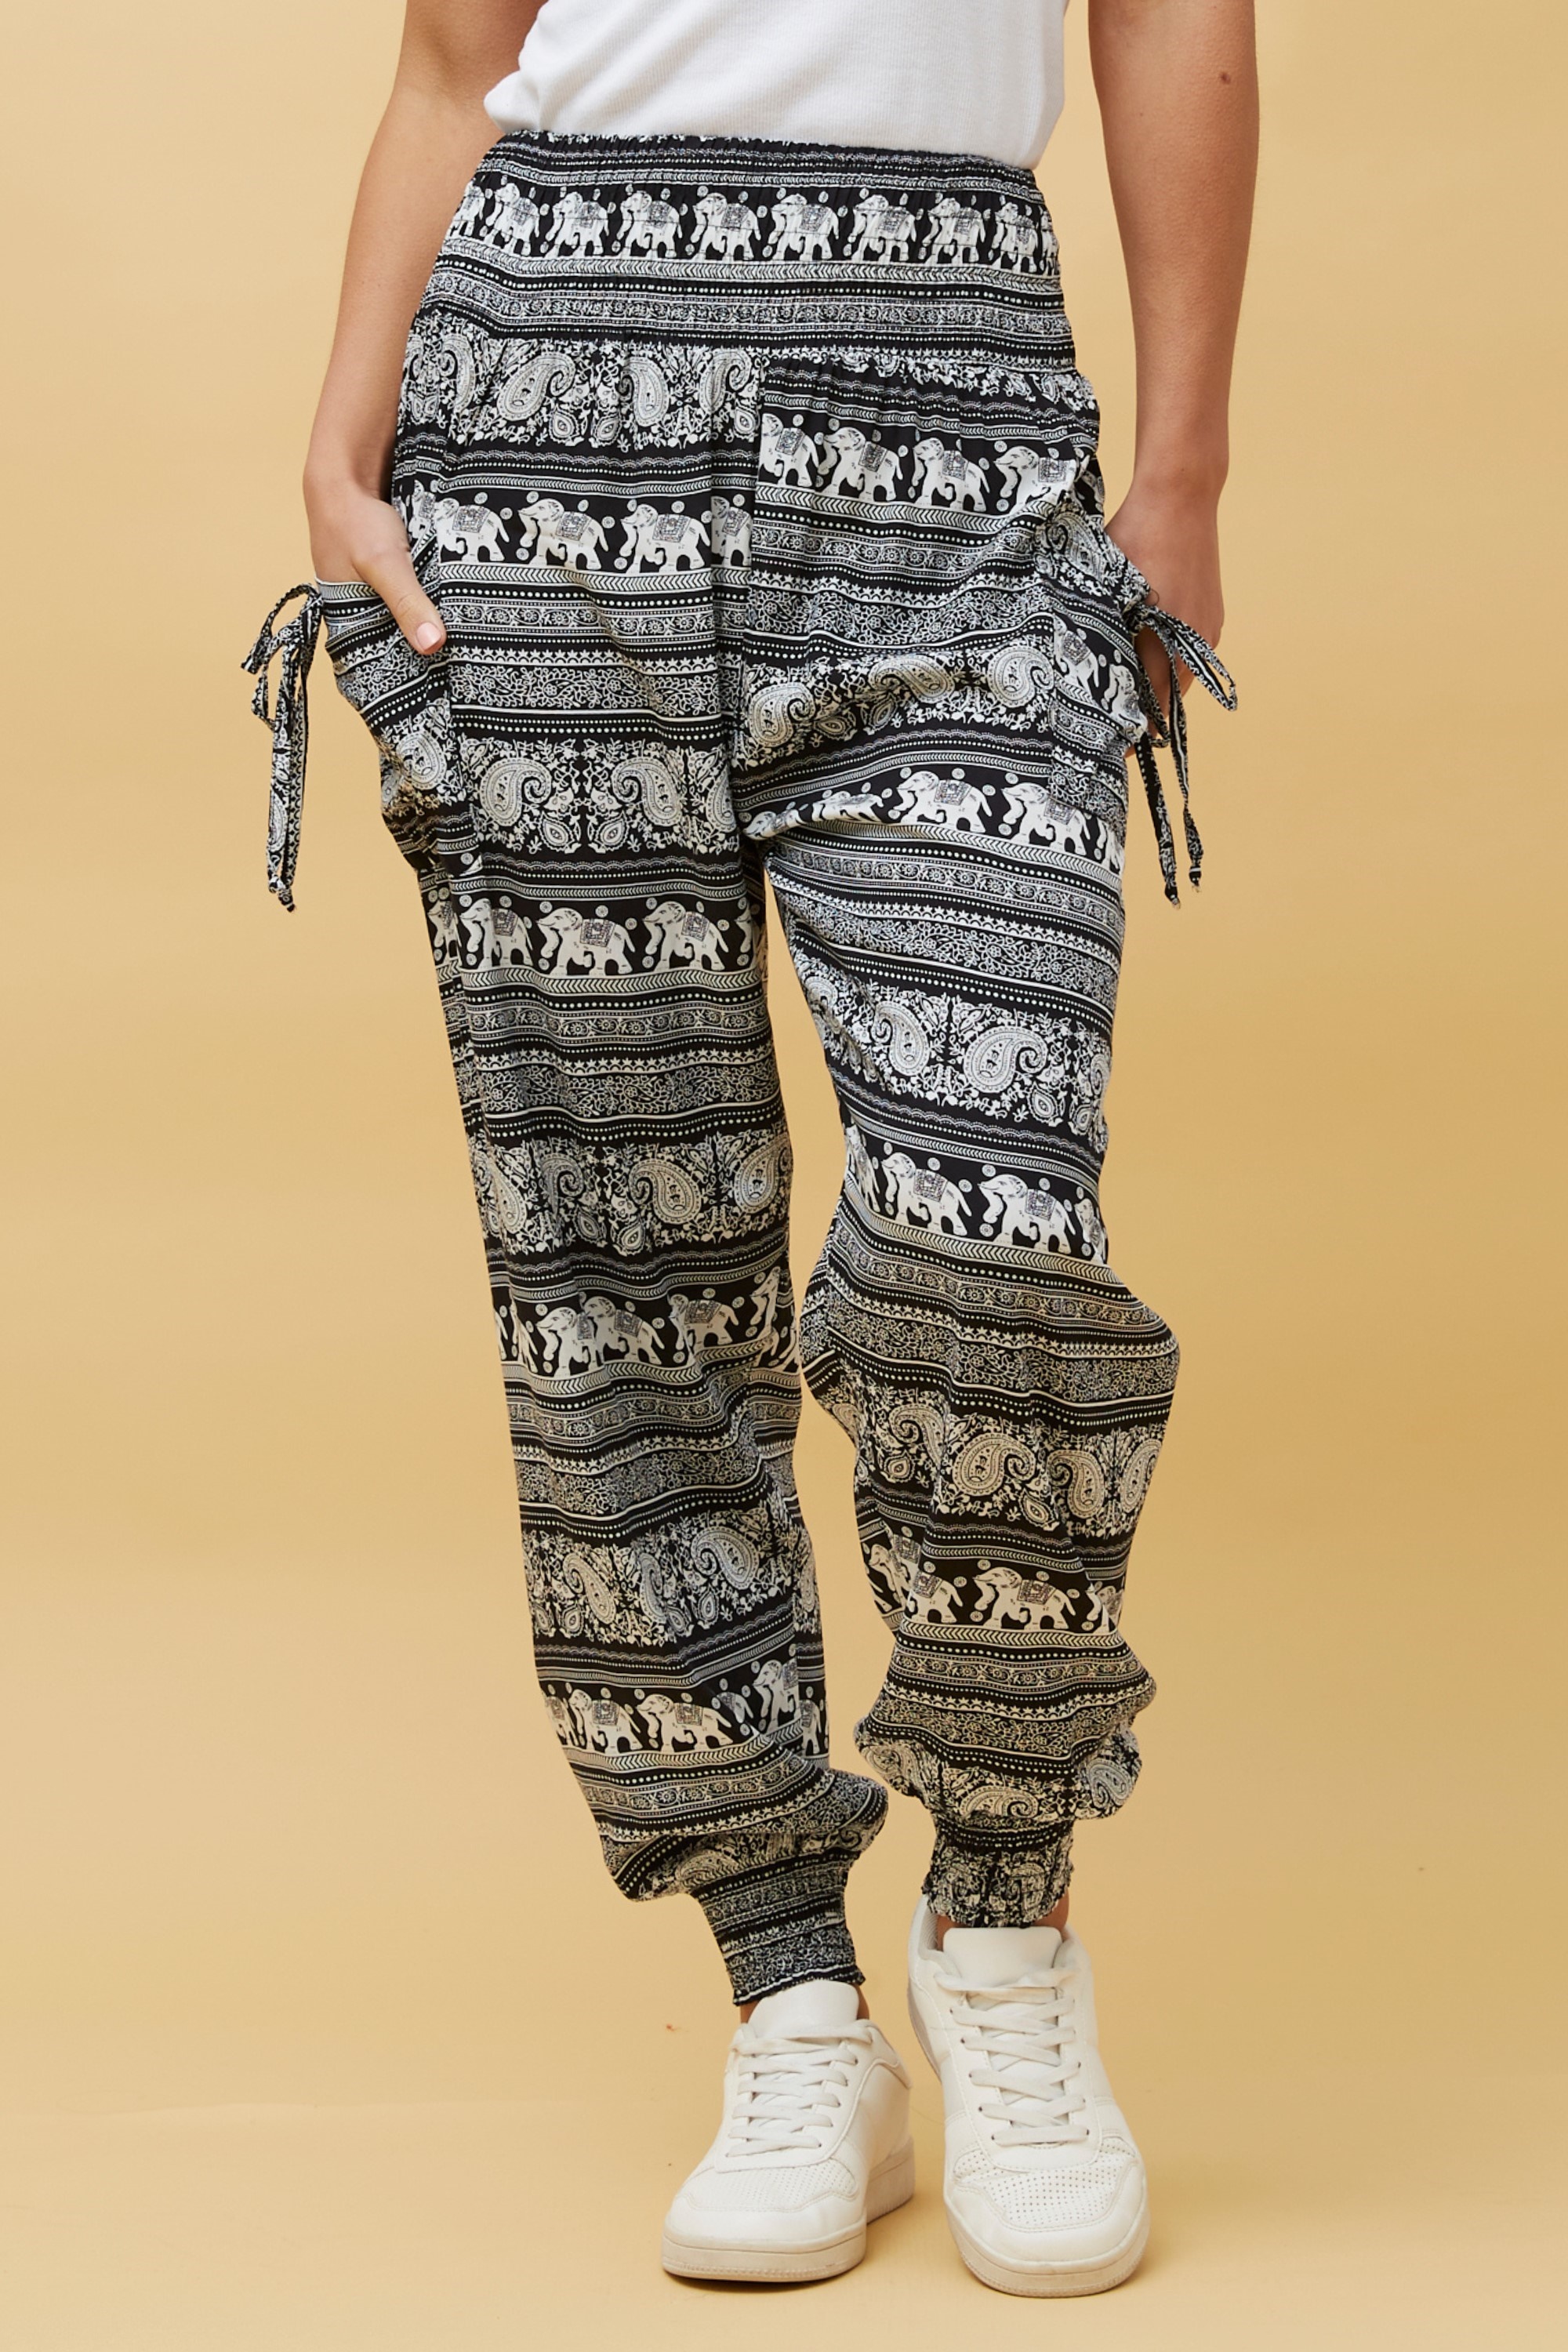 BLACK PEACOCK HAREM Pants Women's Boho Yoga Pants Flowy - Etsy Australia